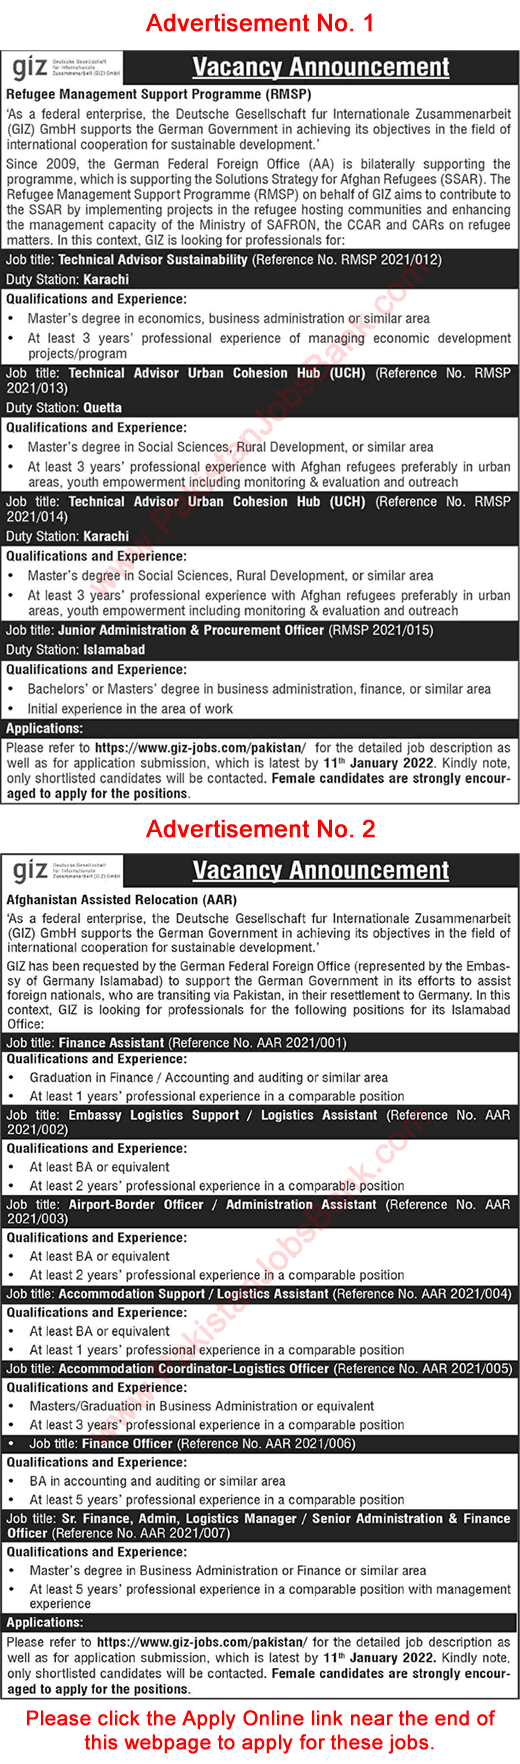 GIZ Pakistan Jobs December 2021 / 2022 Apply Online Finance Assistant / Officers & Others Latest